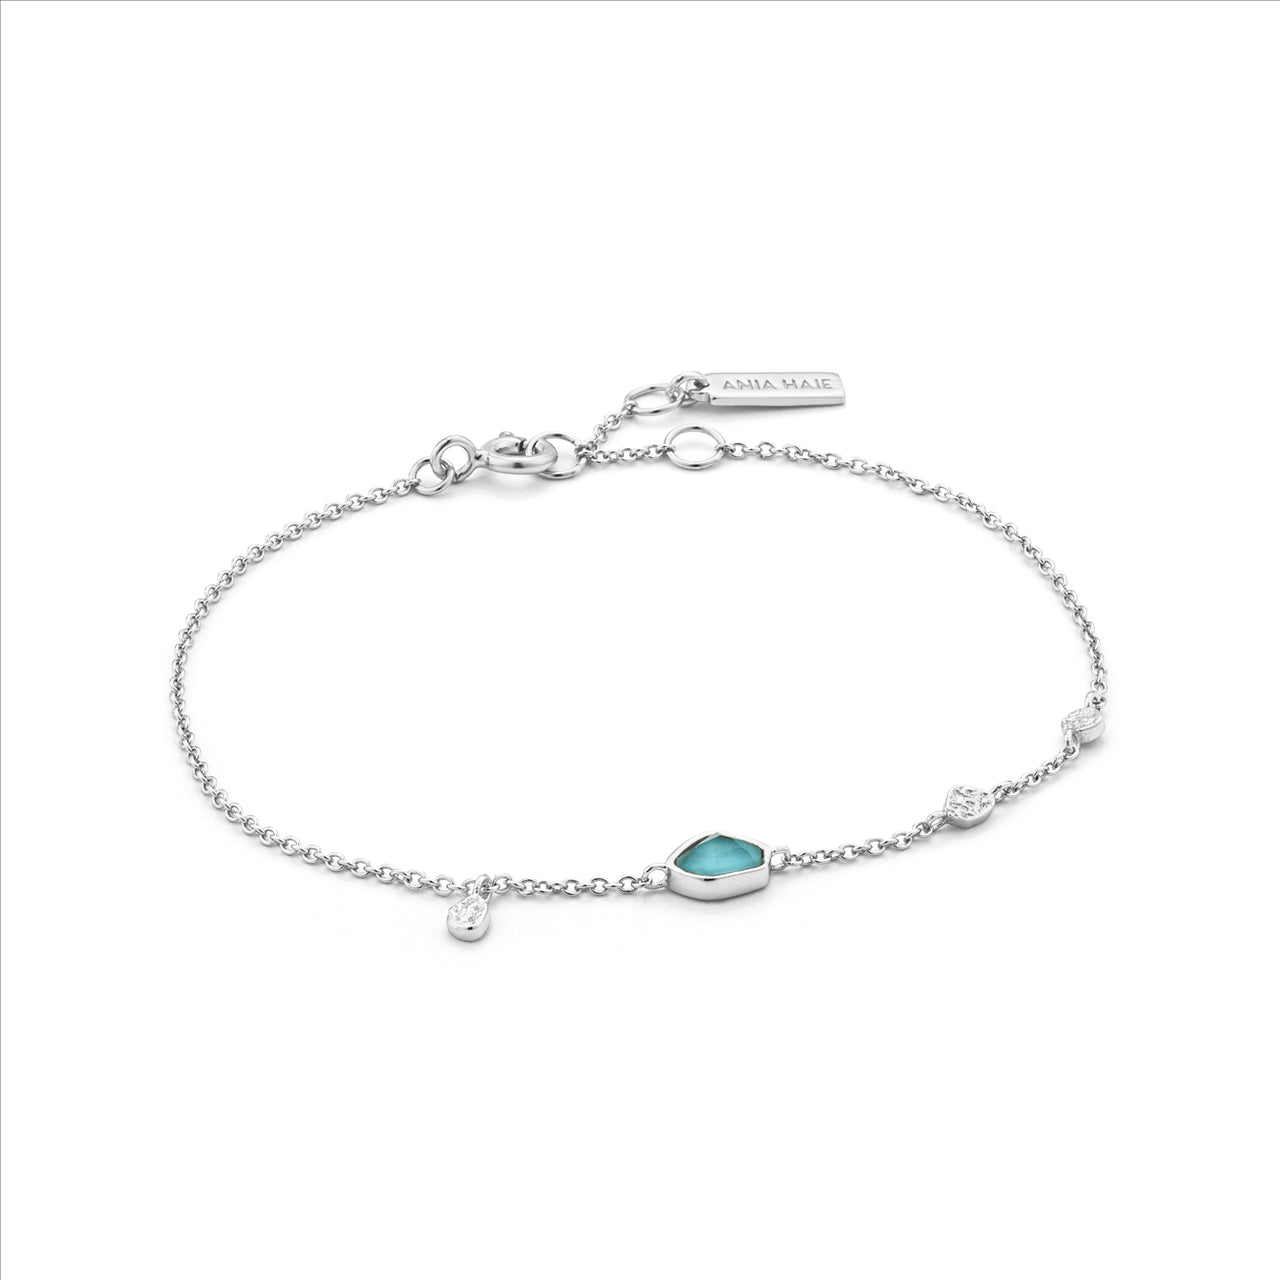 Ania Haie Turquoise Discs Silver Bracelet.